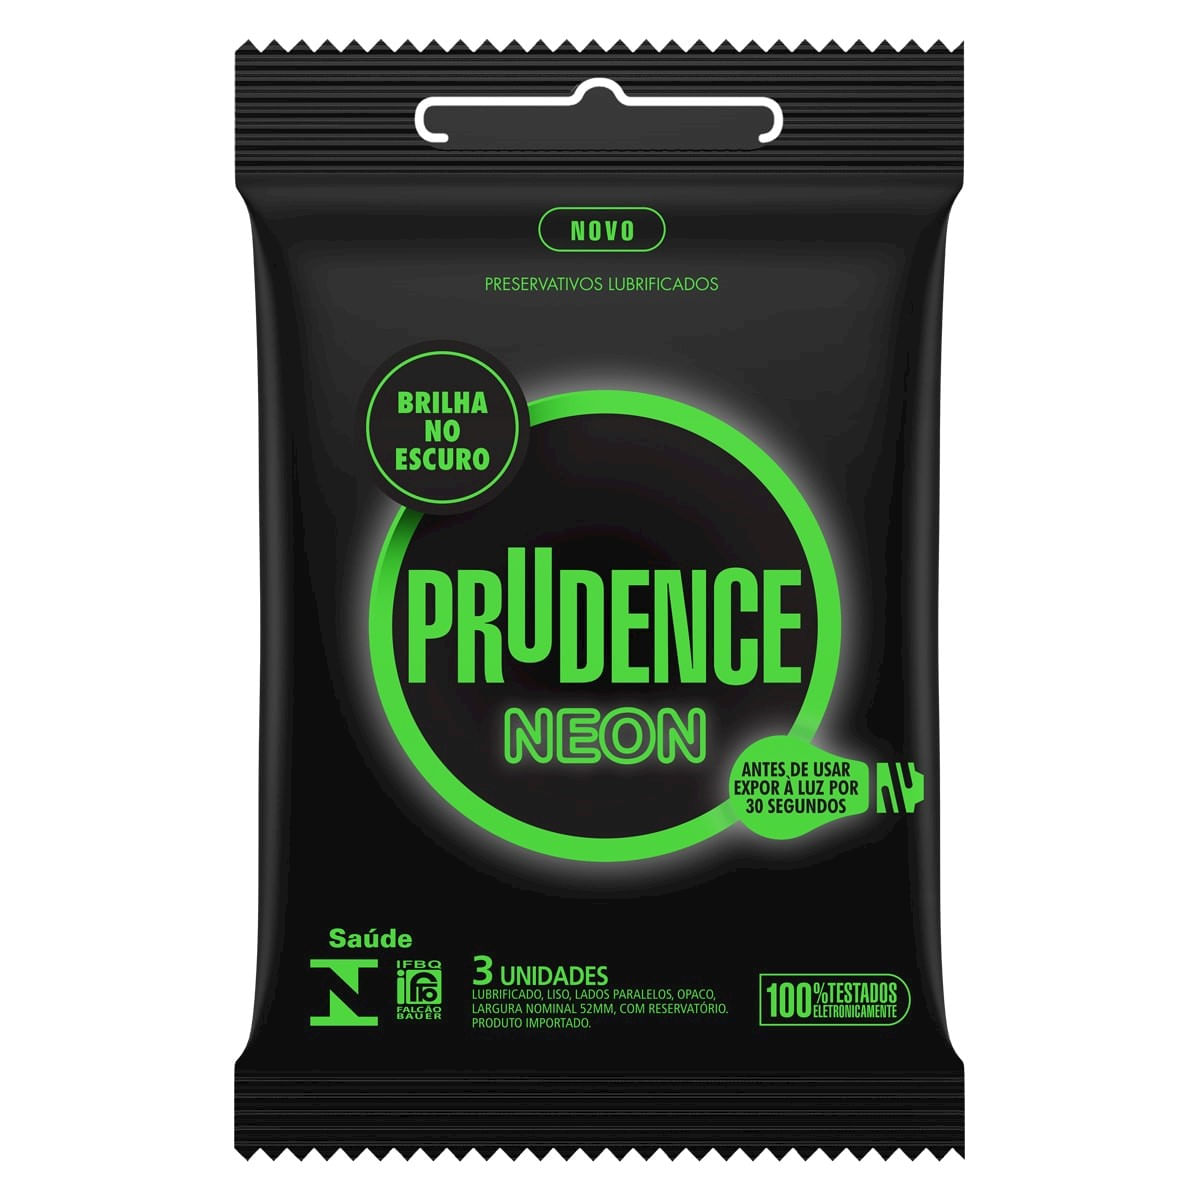 Preservativos Neon Prudence